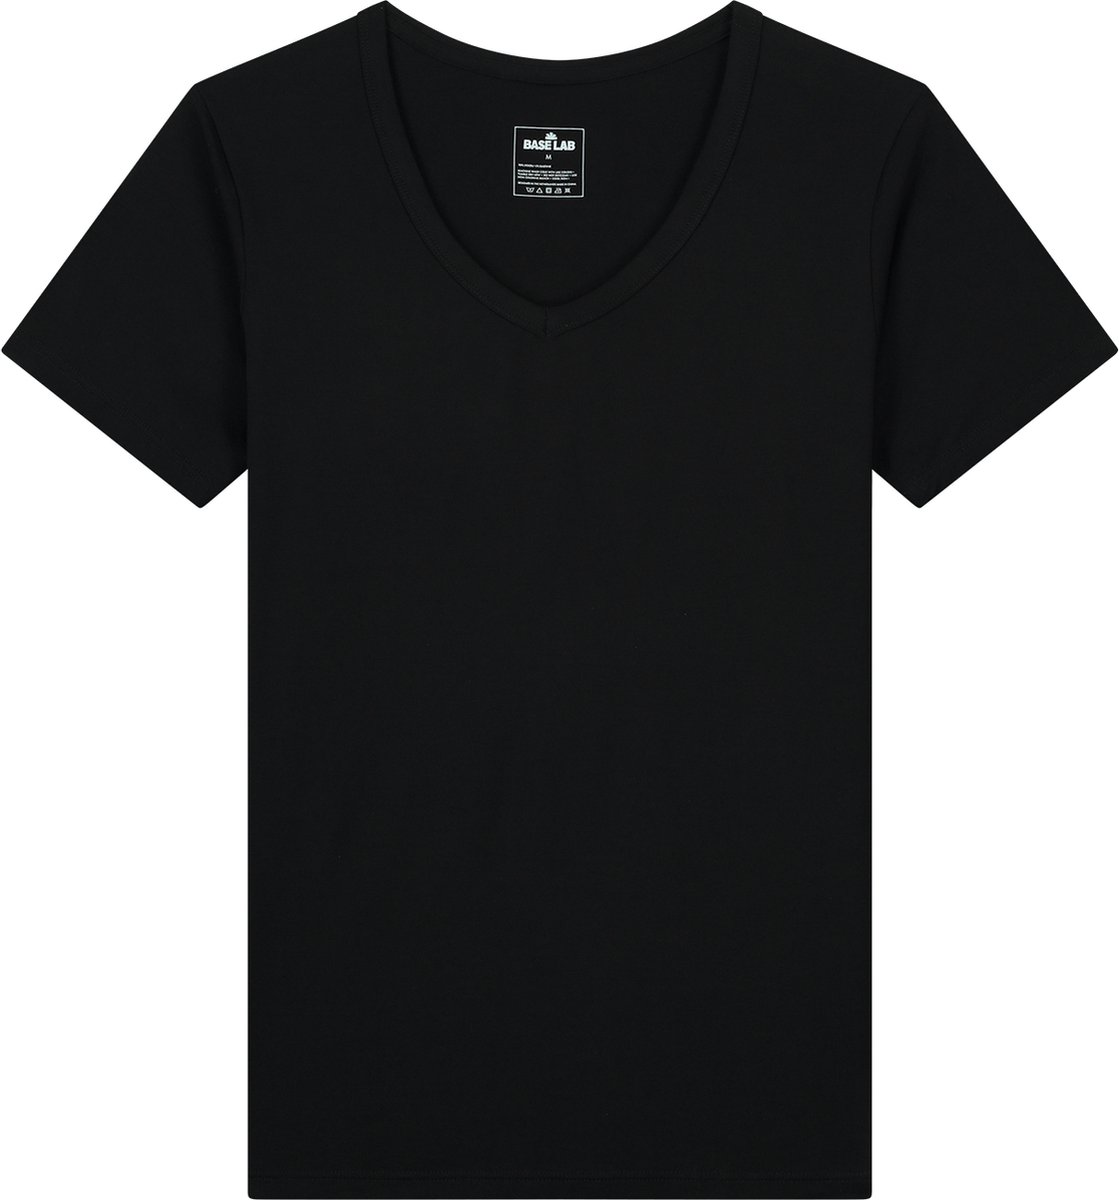 Baselab - Ondershirt - Zwart - Maat L